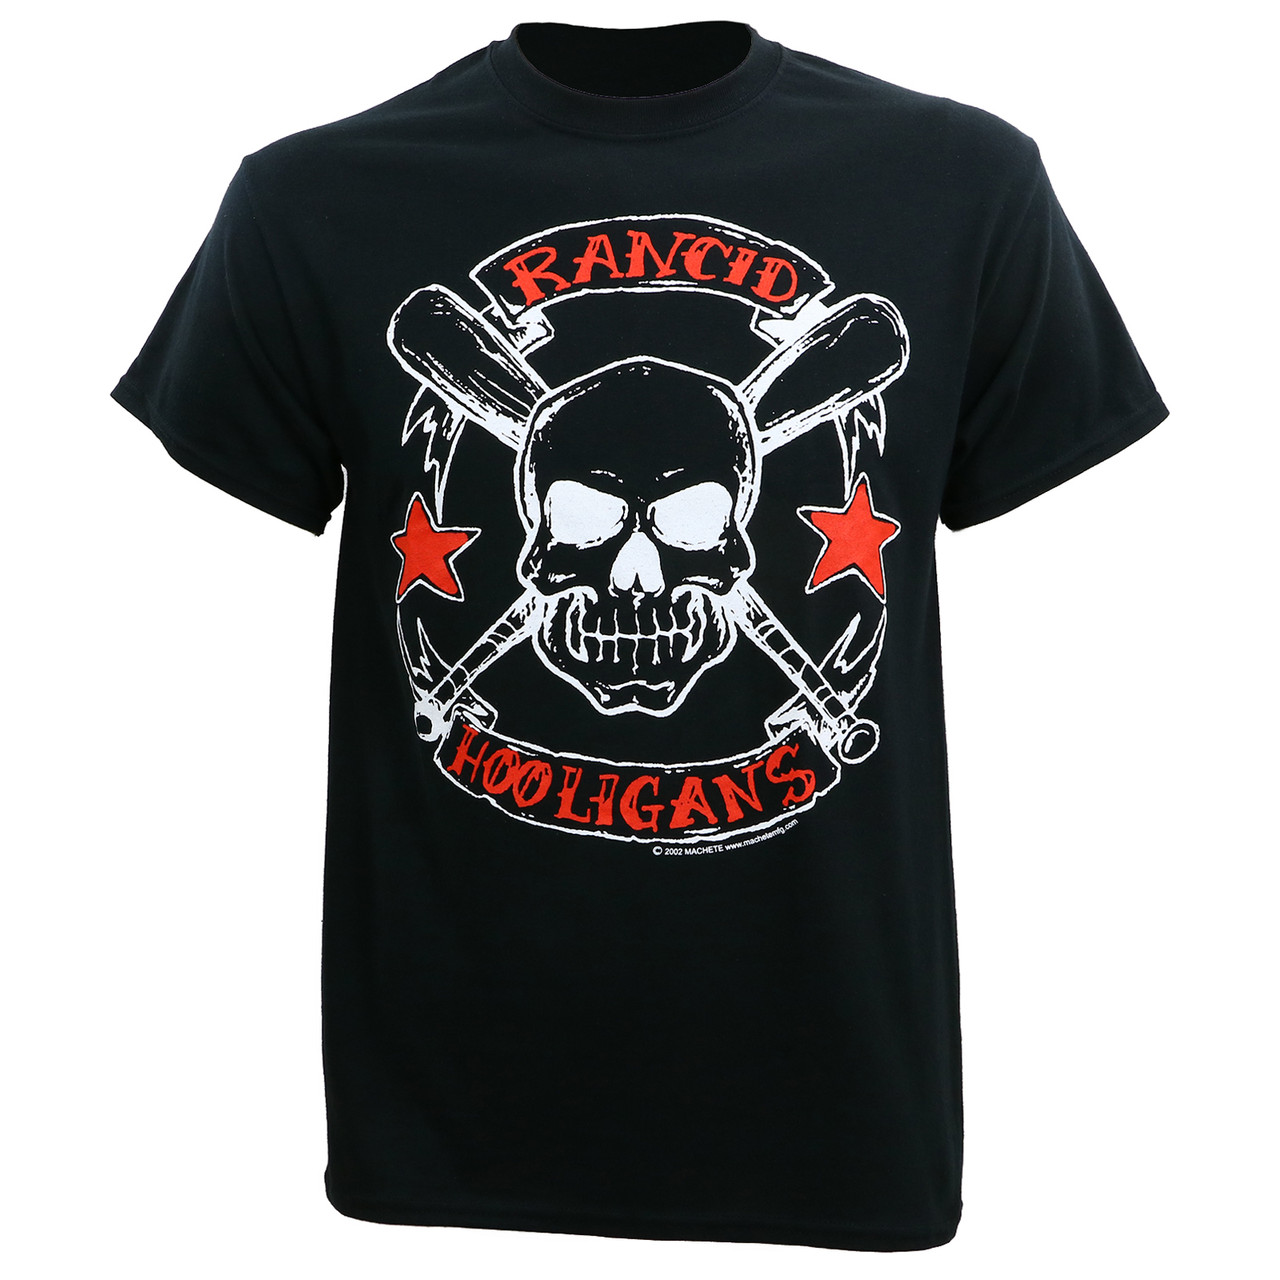 Rancid Hooligans T-Shirt - Merch2rock Alternative Clothing